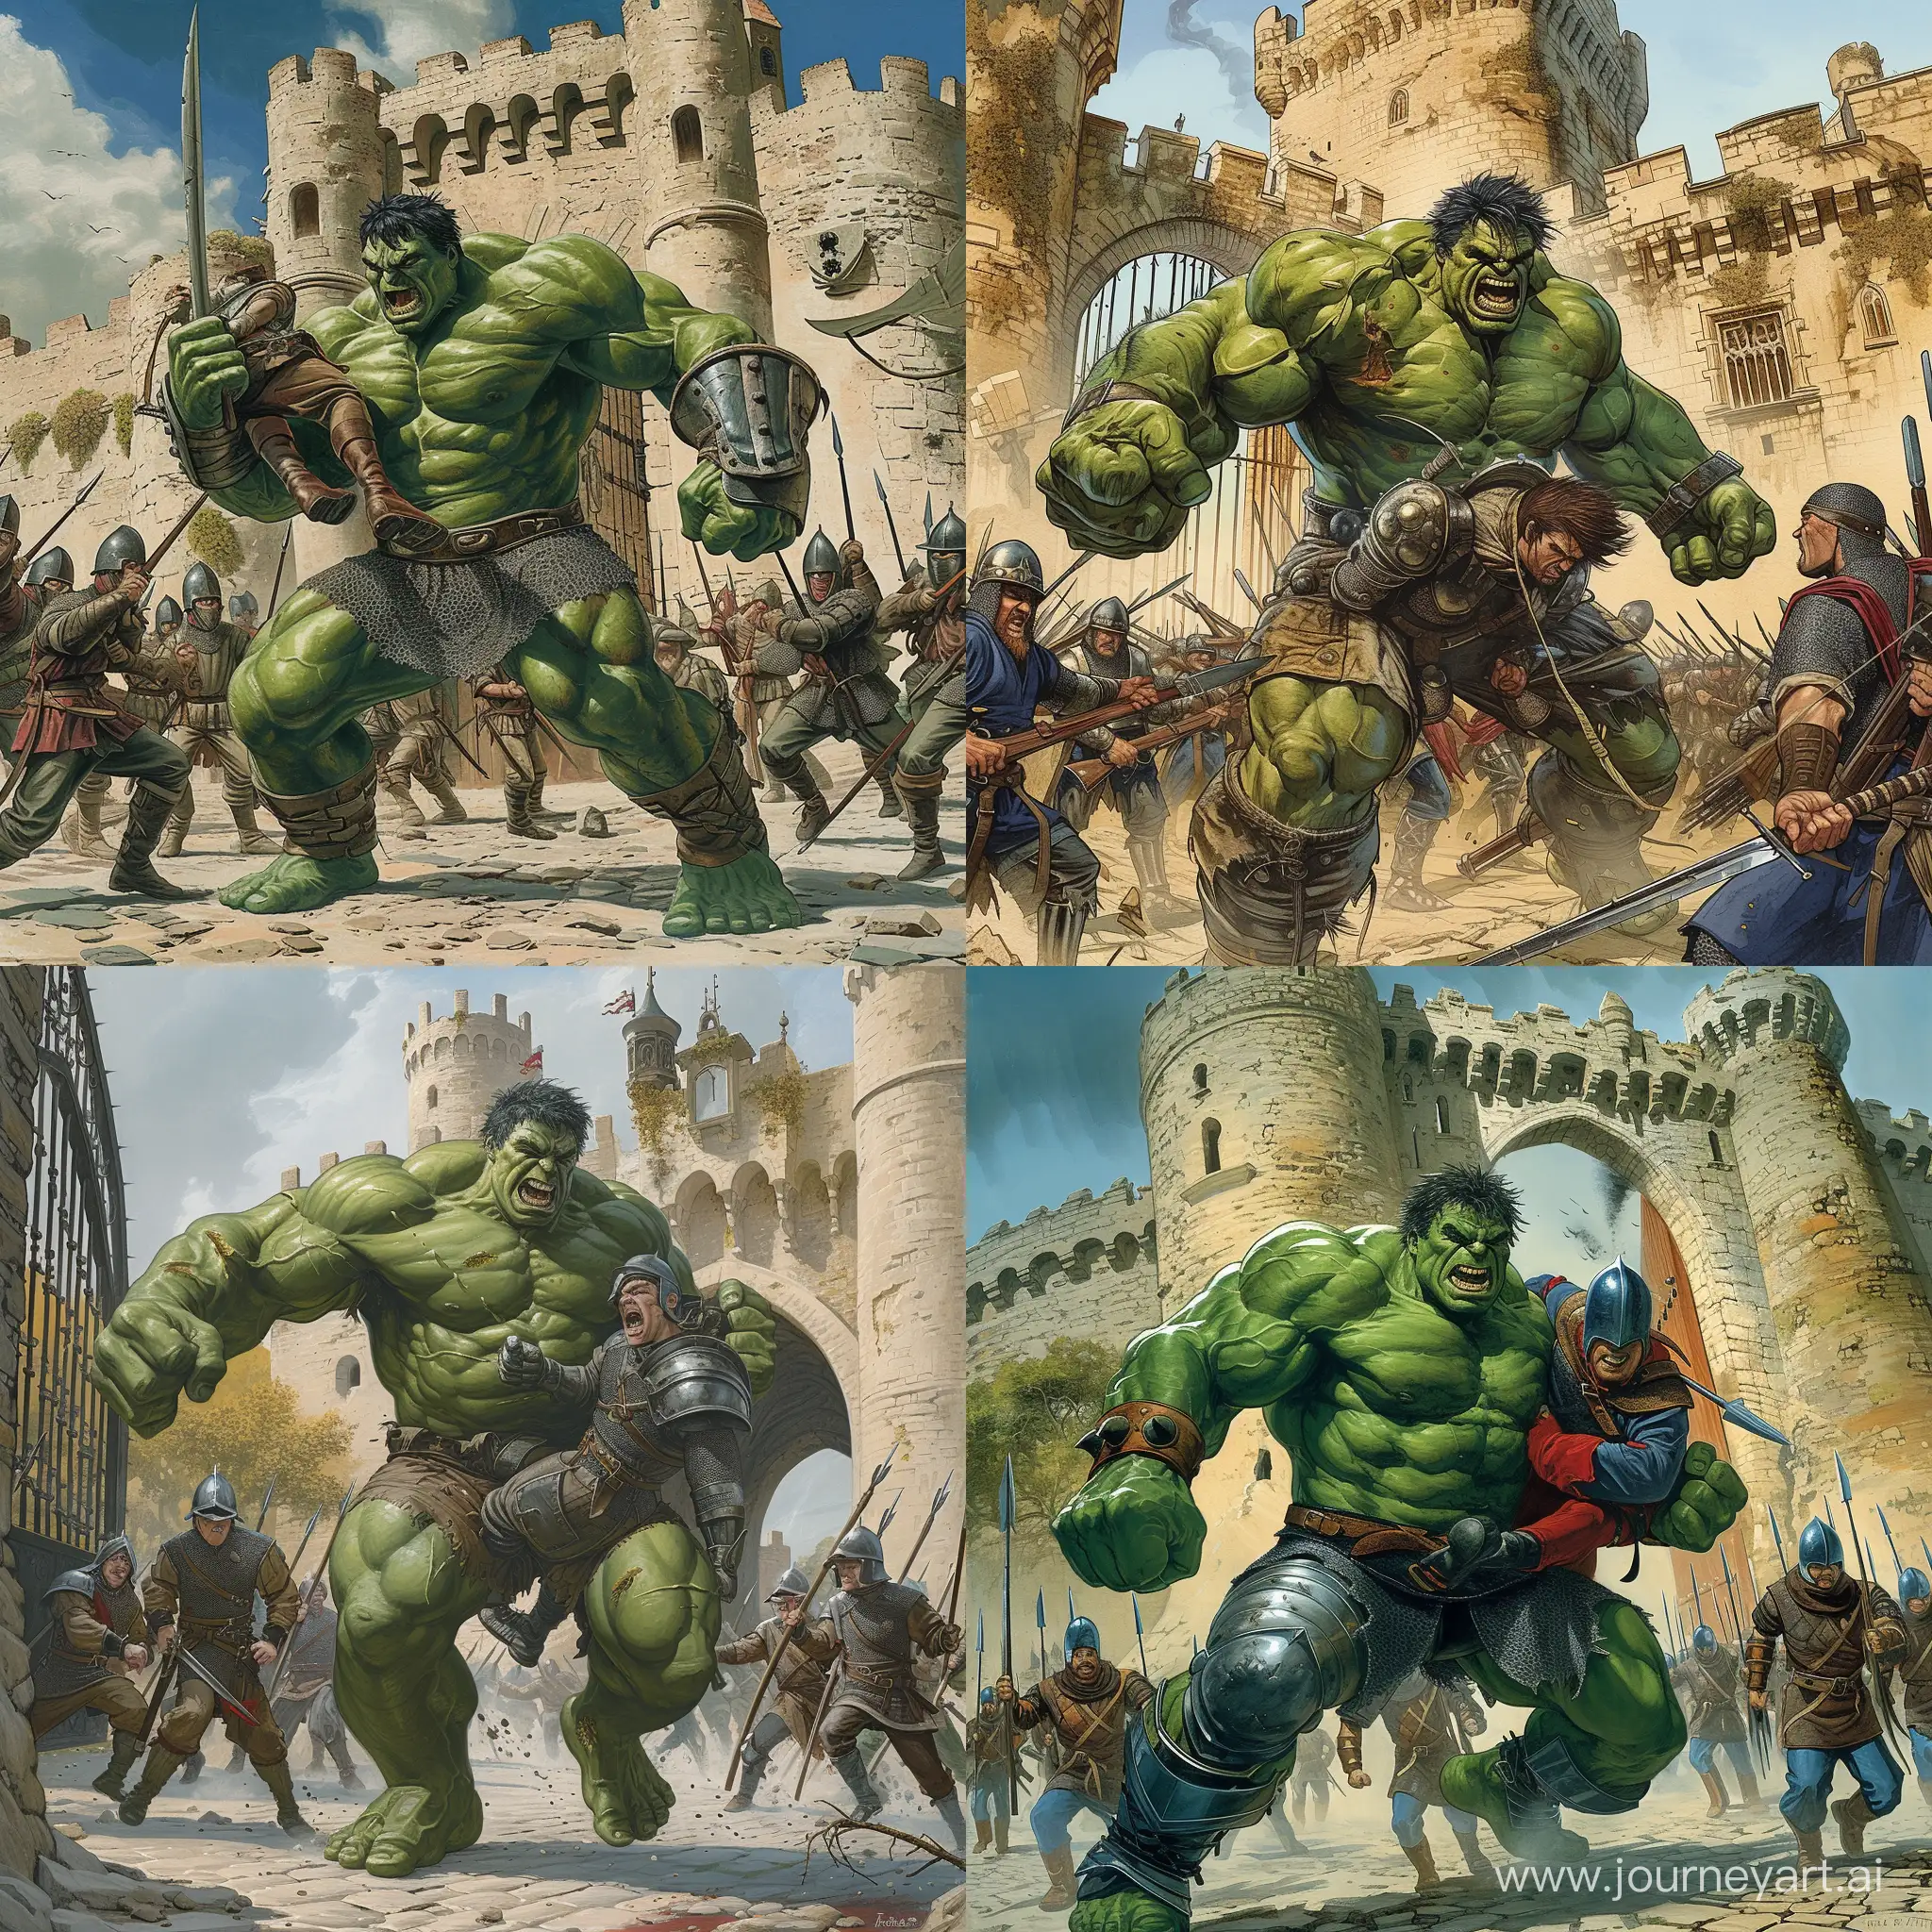 Hulk-Battling-Medieval-Soldiers-at-Castle-Gate